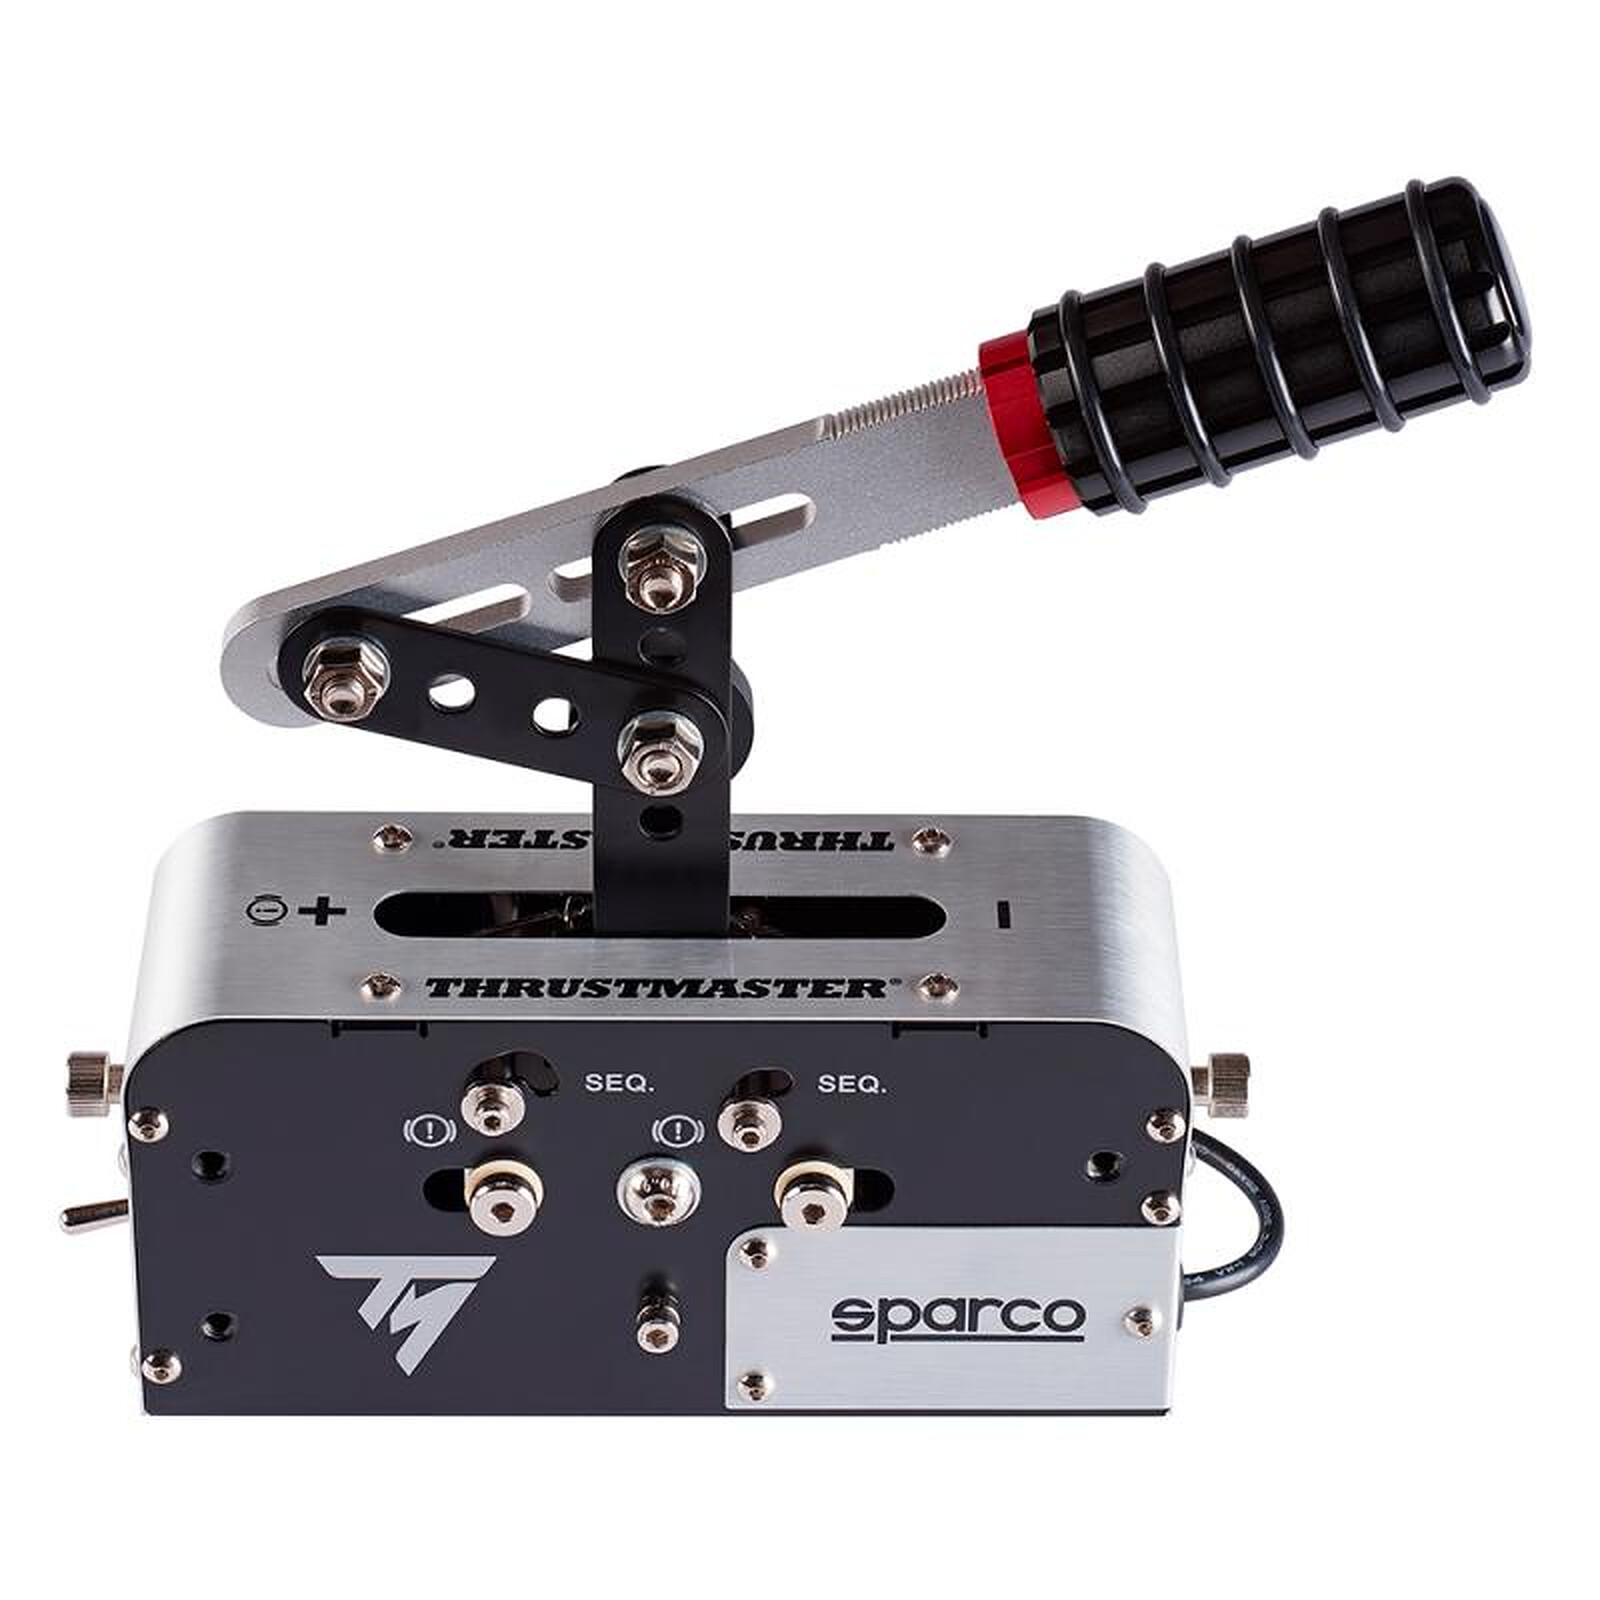 Thrustmaster TSS Handbrake Sparco Mod+ (4060107) - Achat Volant  Thrustmaster pour professionnels sur